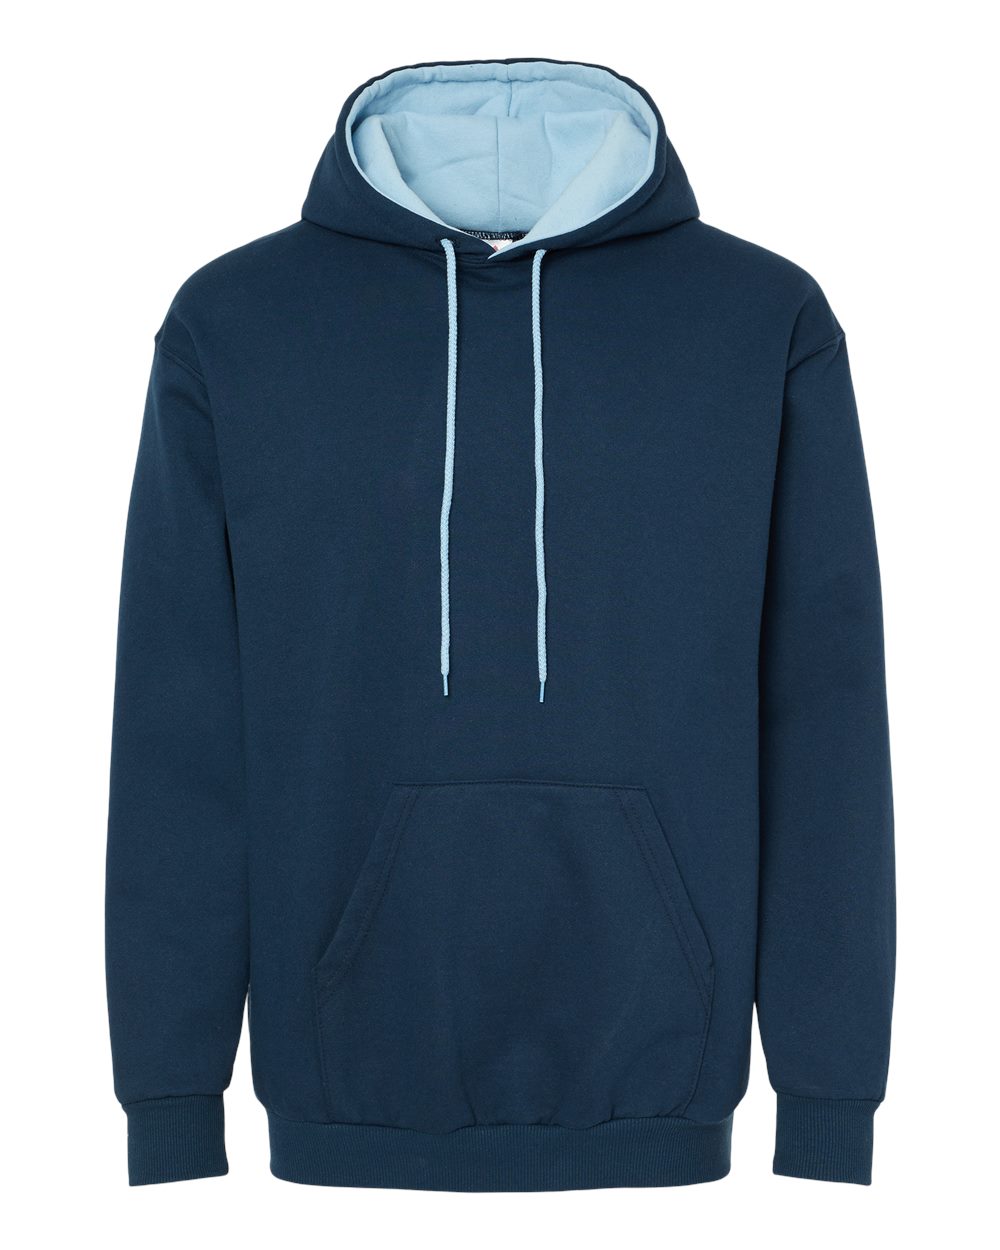 King Fashion Two-Tone Hooded Sweatshirt KF9041 #color_Navy/ Light Blue